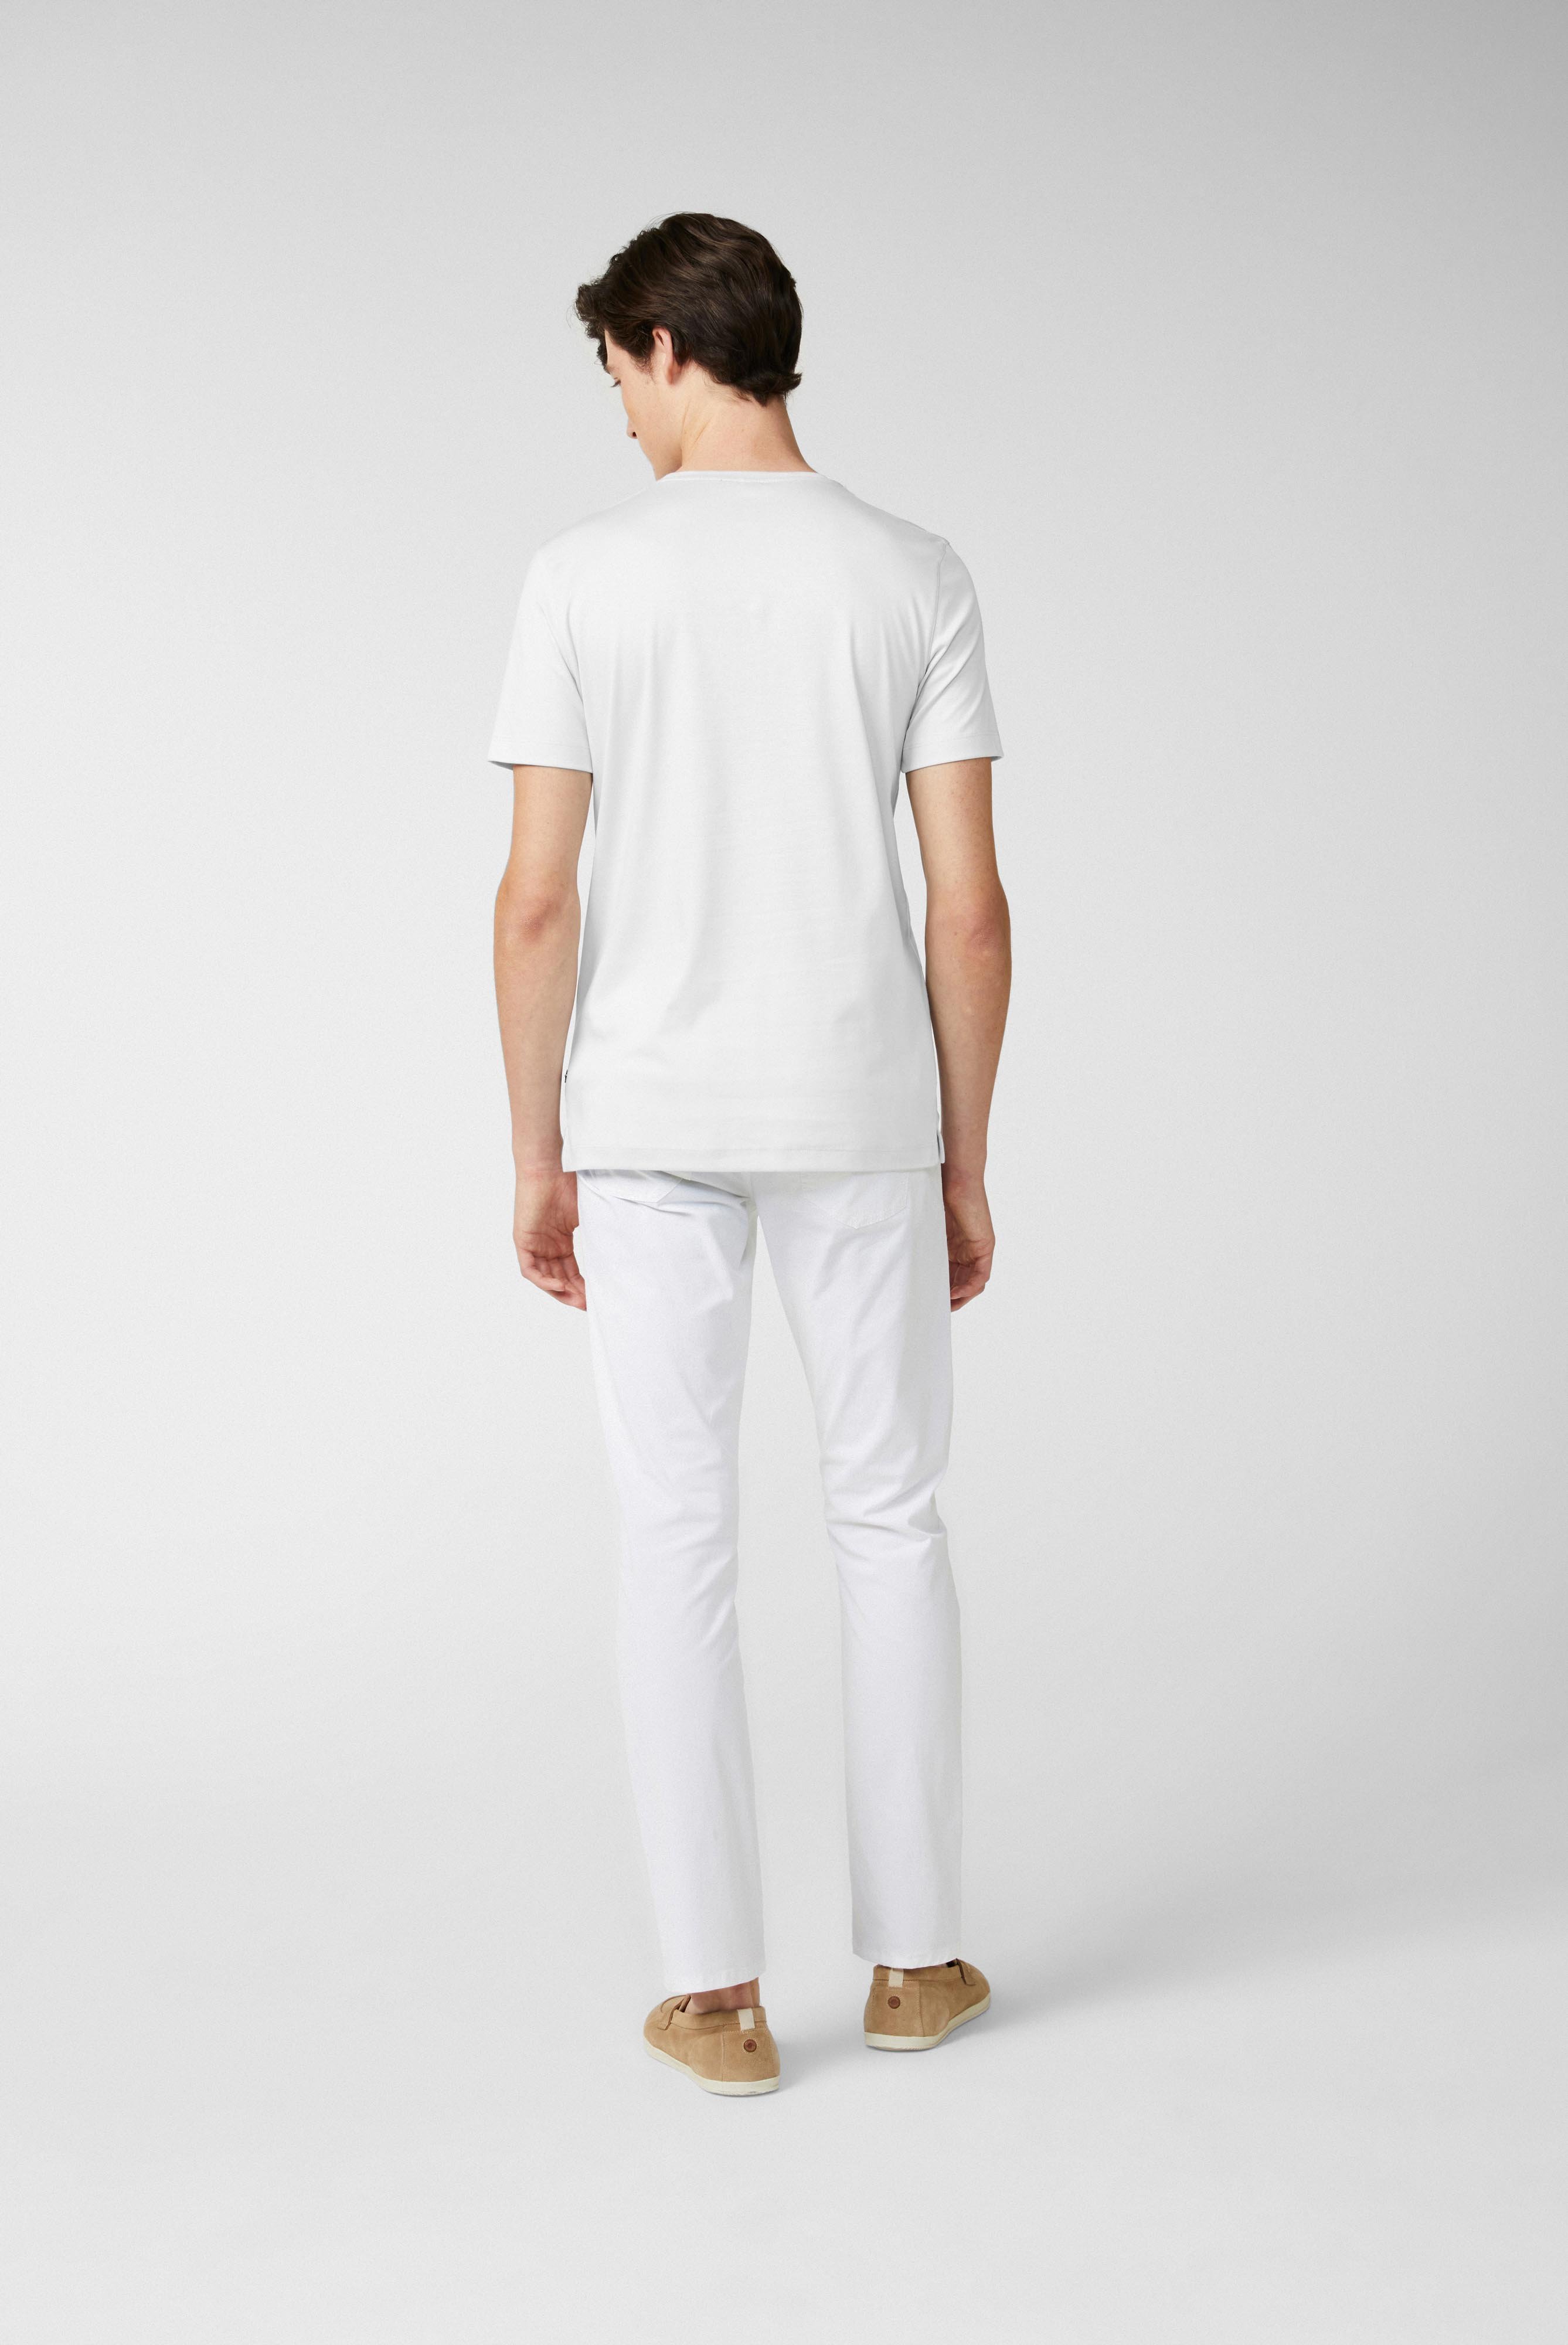 T-Shirts+Rundhals Jersey T-Shirt Slim Fit+20.1717.UX.180031.000.XXL